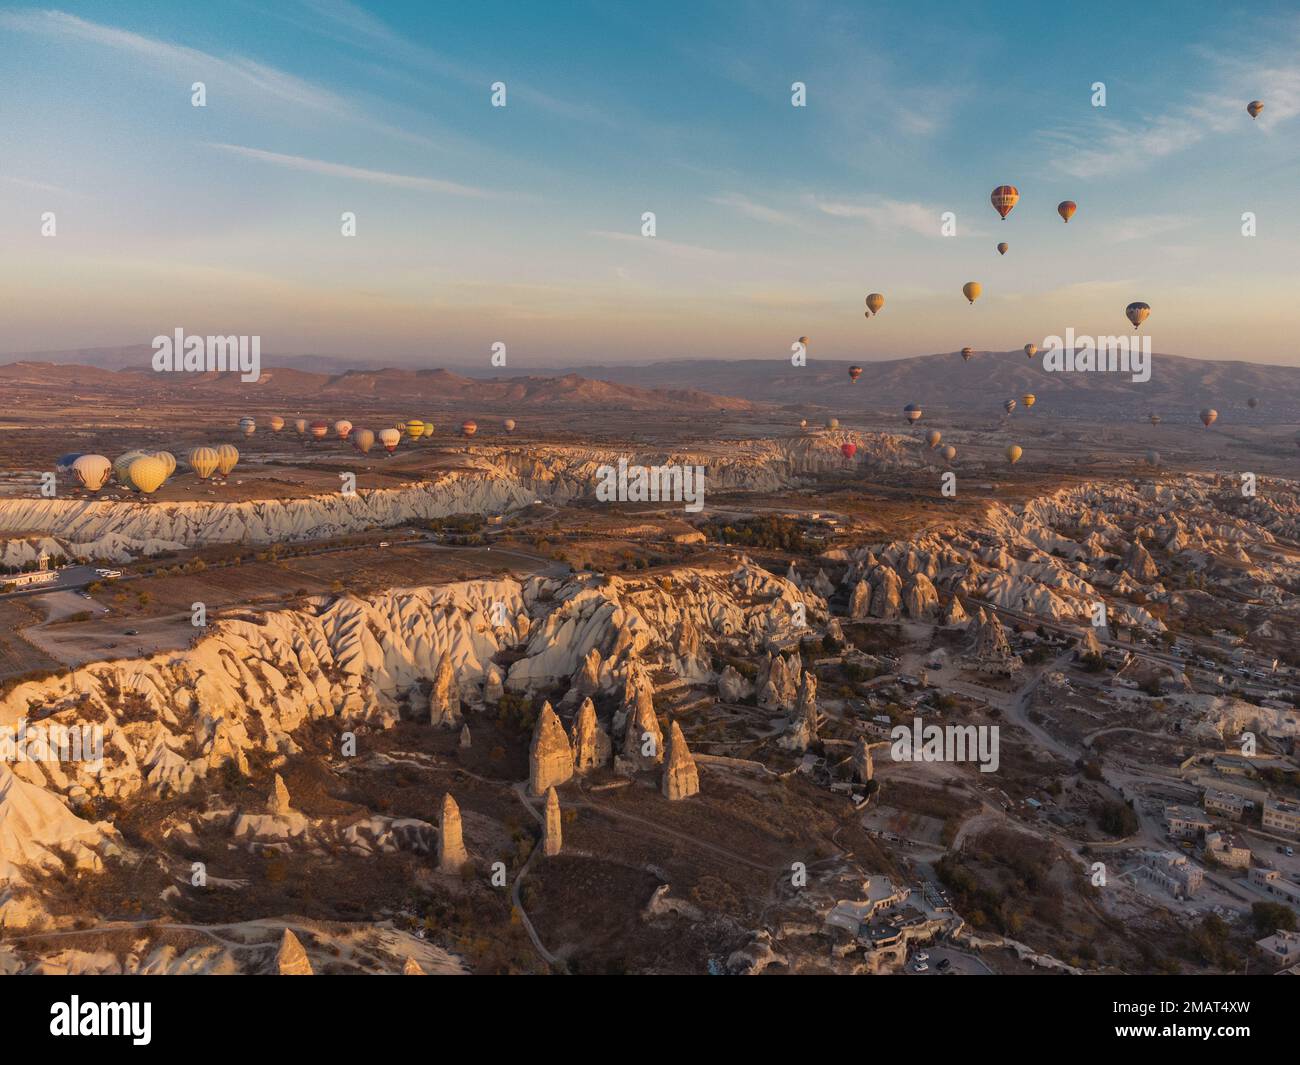 hot air balloons at fairy chimneys at sunrise in G reme, Cappadocia. Turkey Stock Photo